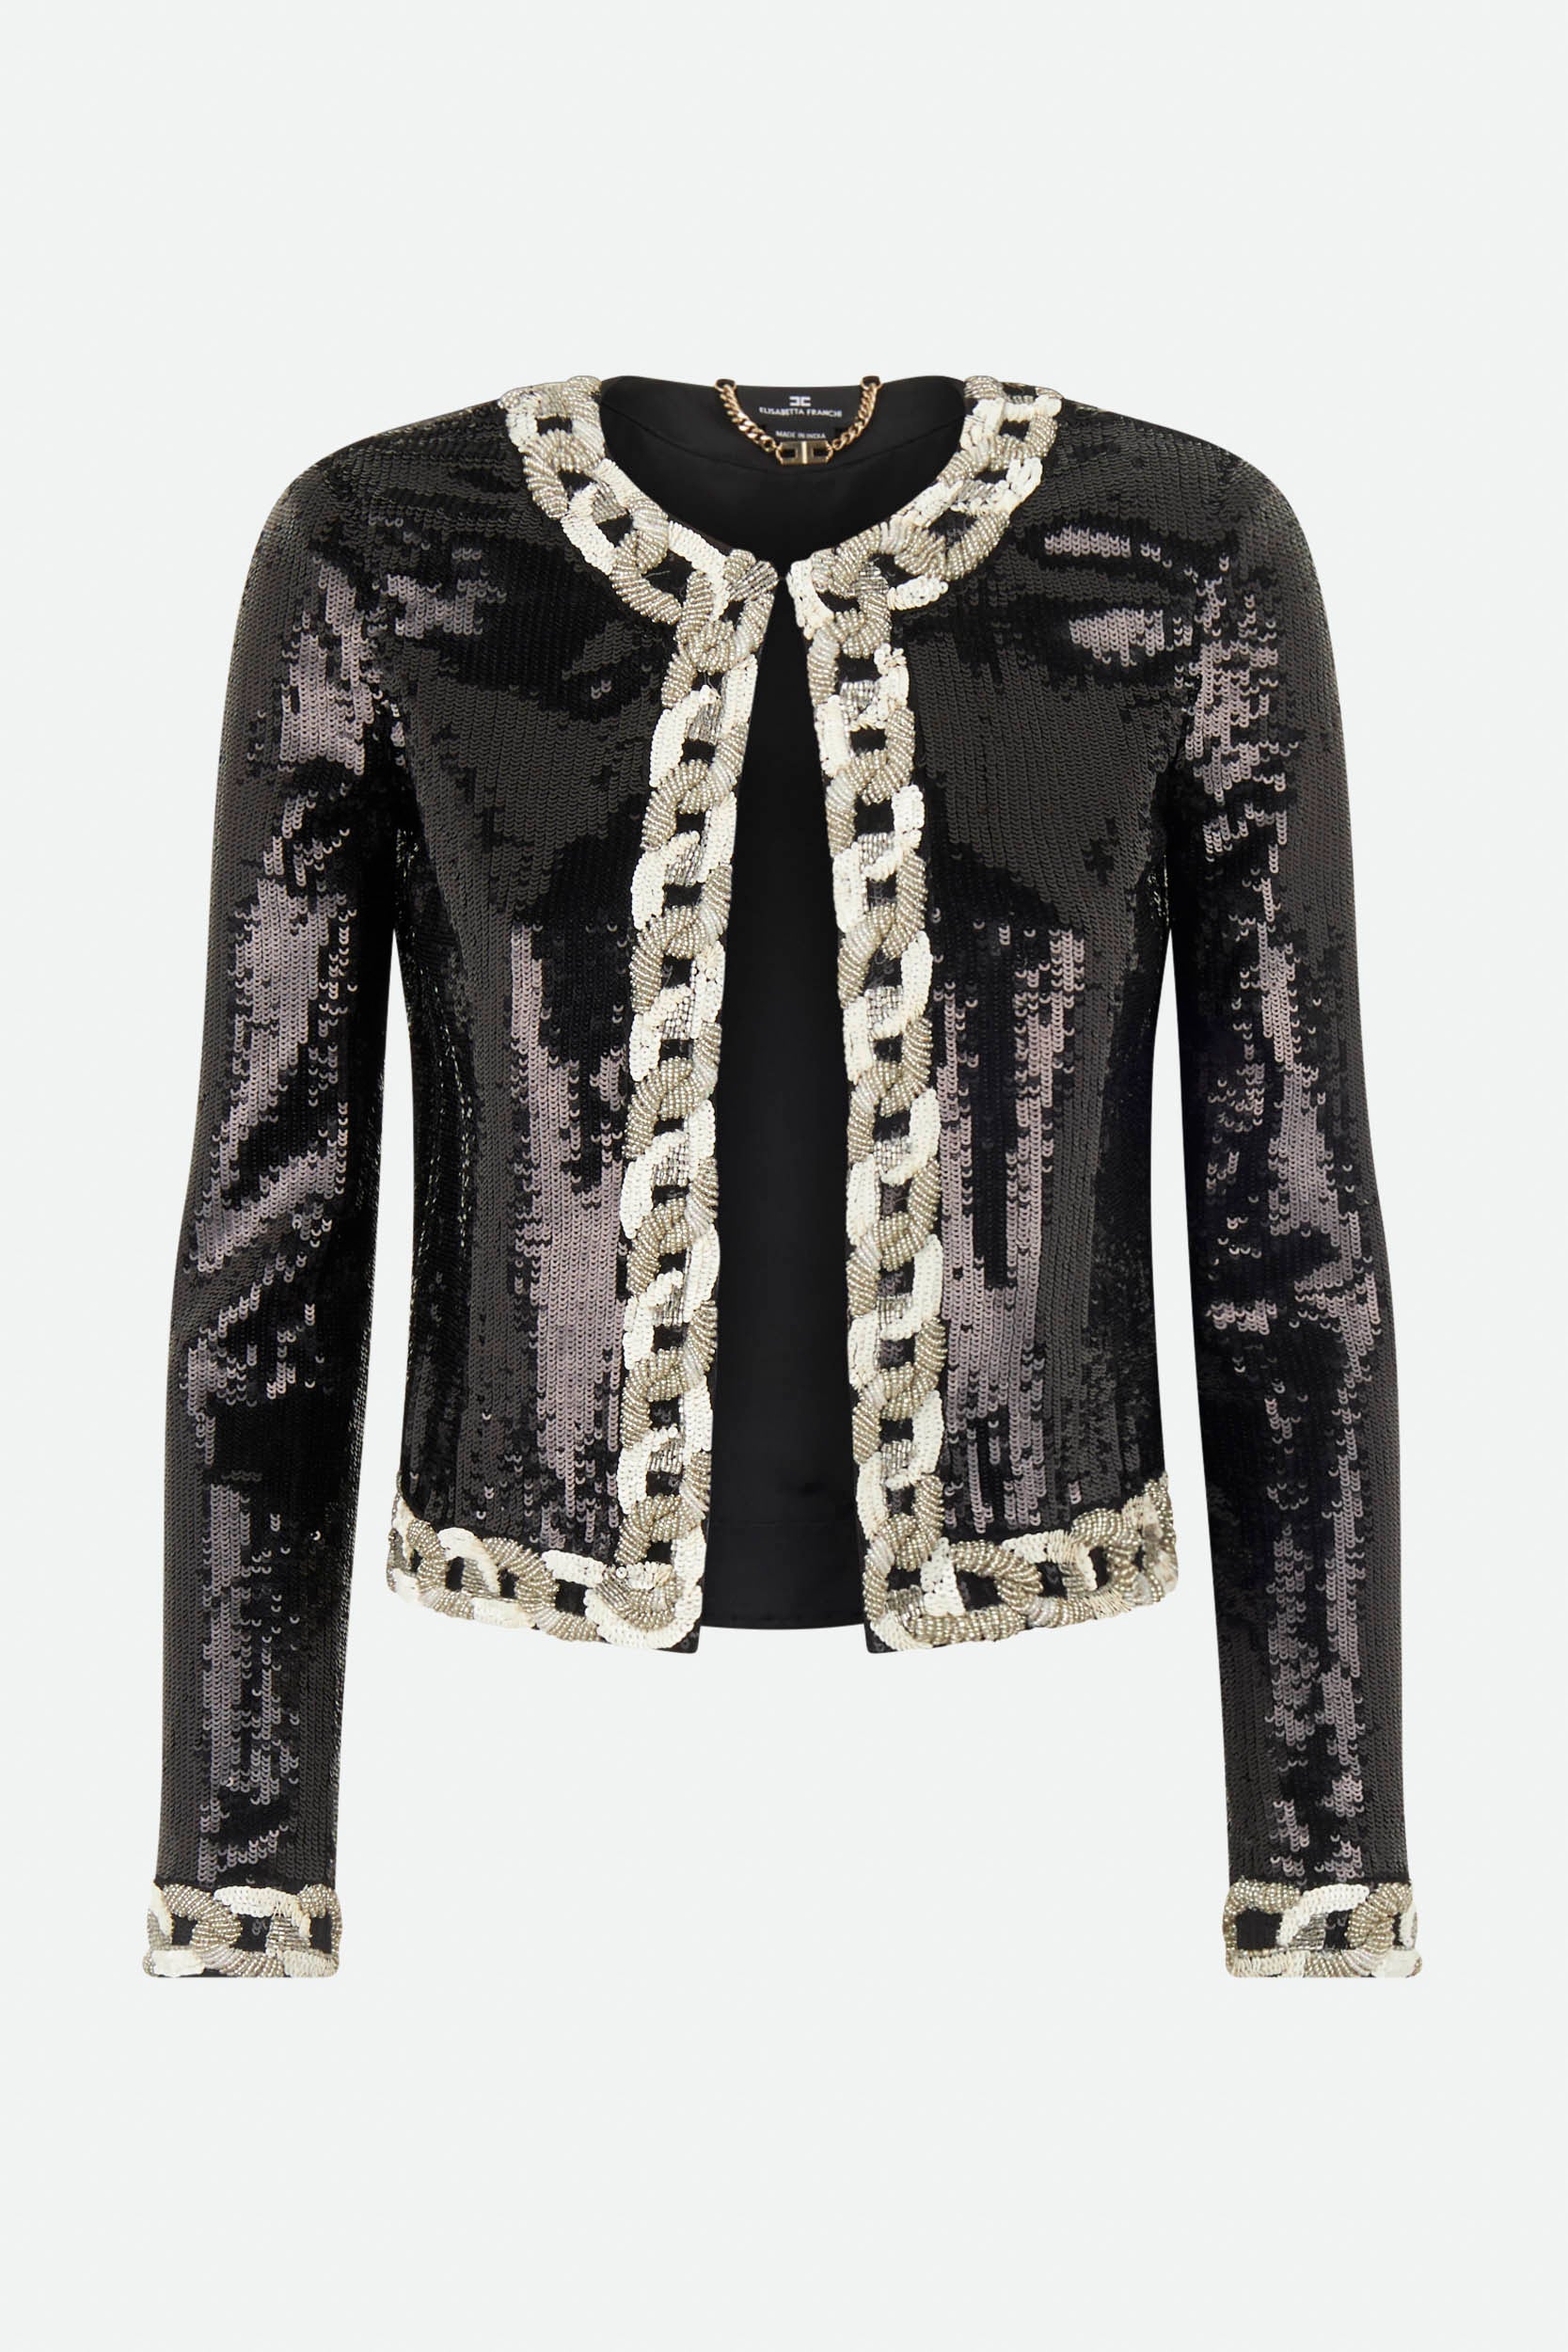 Elisabetta Franchi Black Sequined Jacket